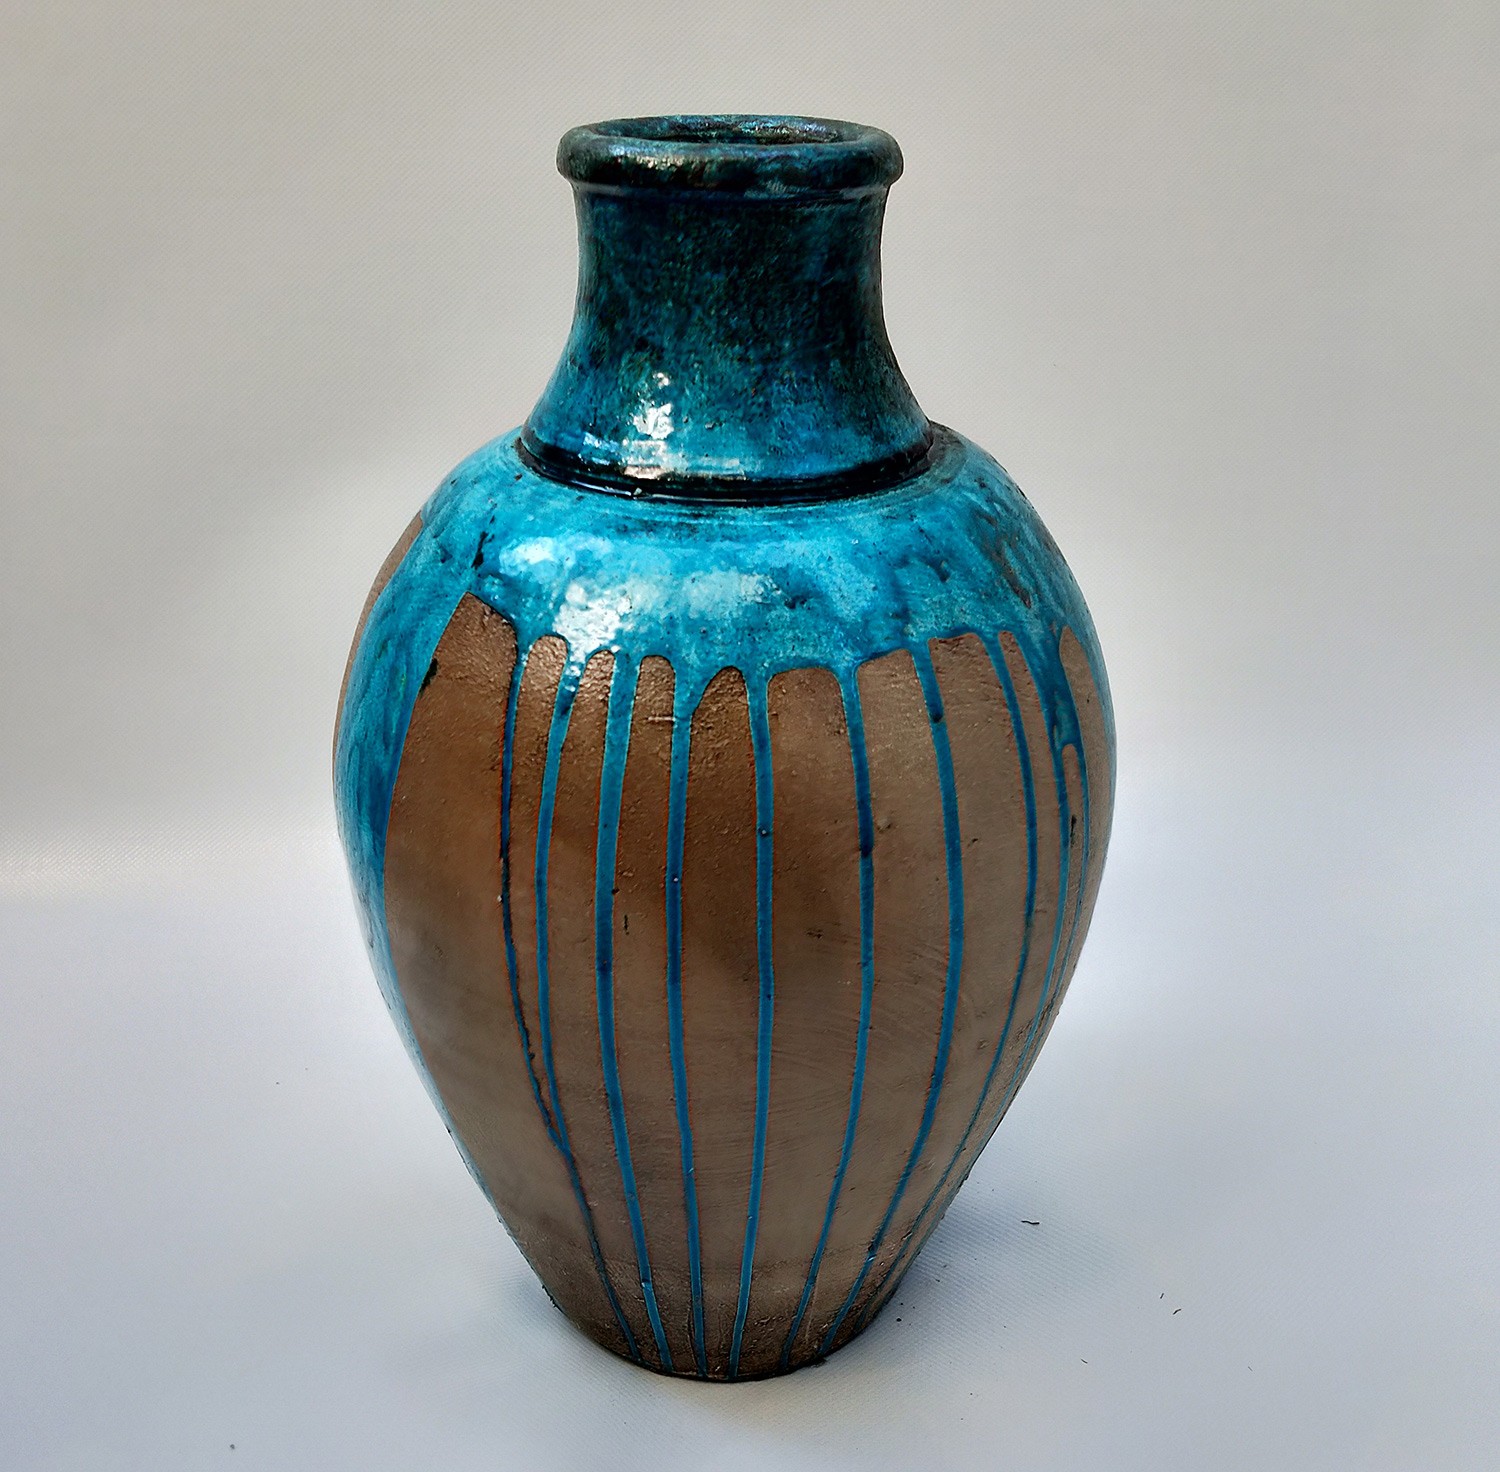 Details about   Water Pot Ceramic Hand Painted Turkish Ceramic Vase Amazing Pot 